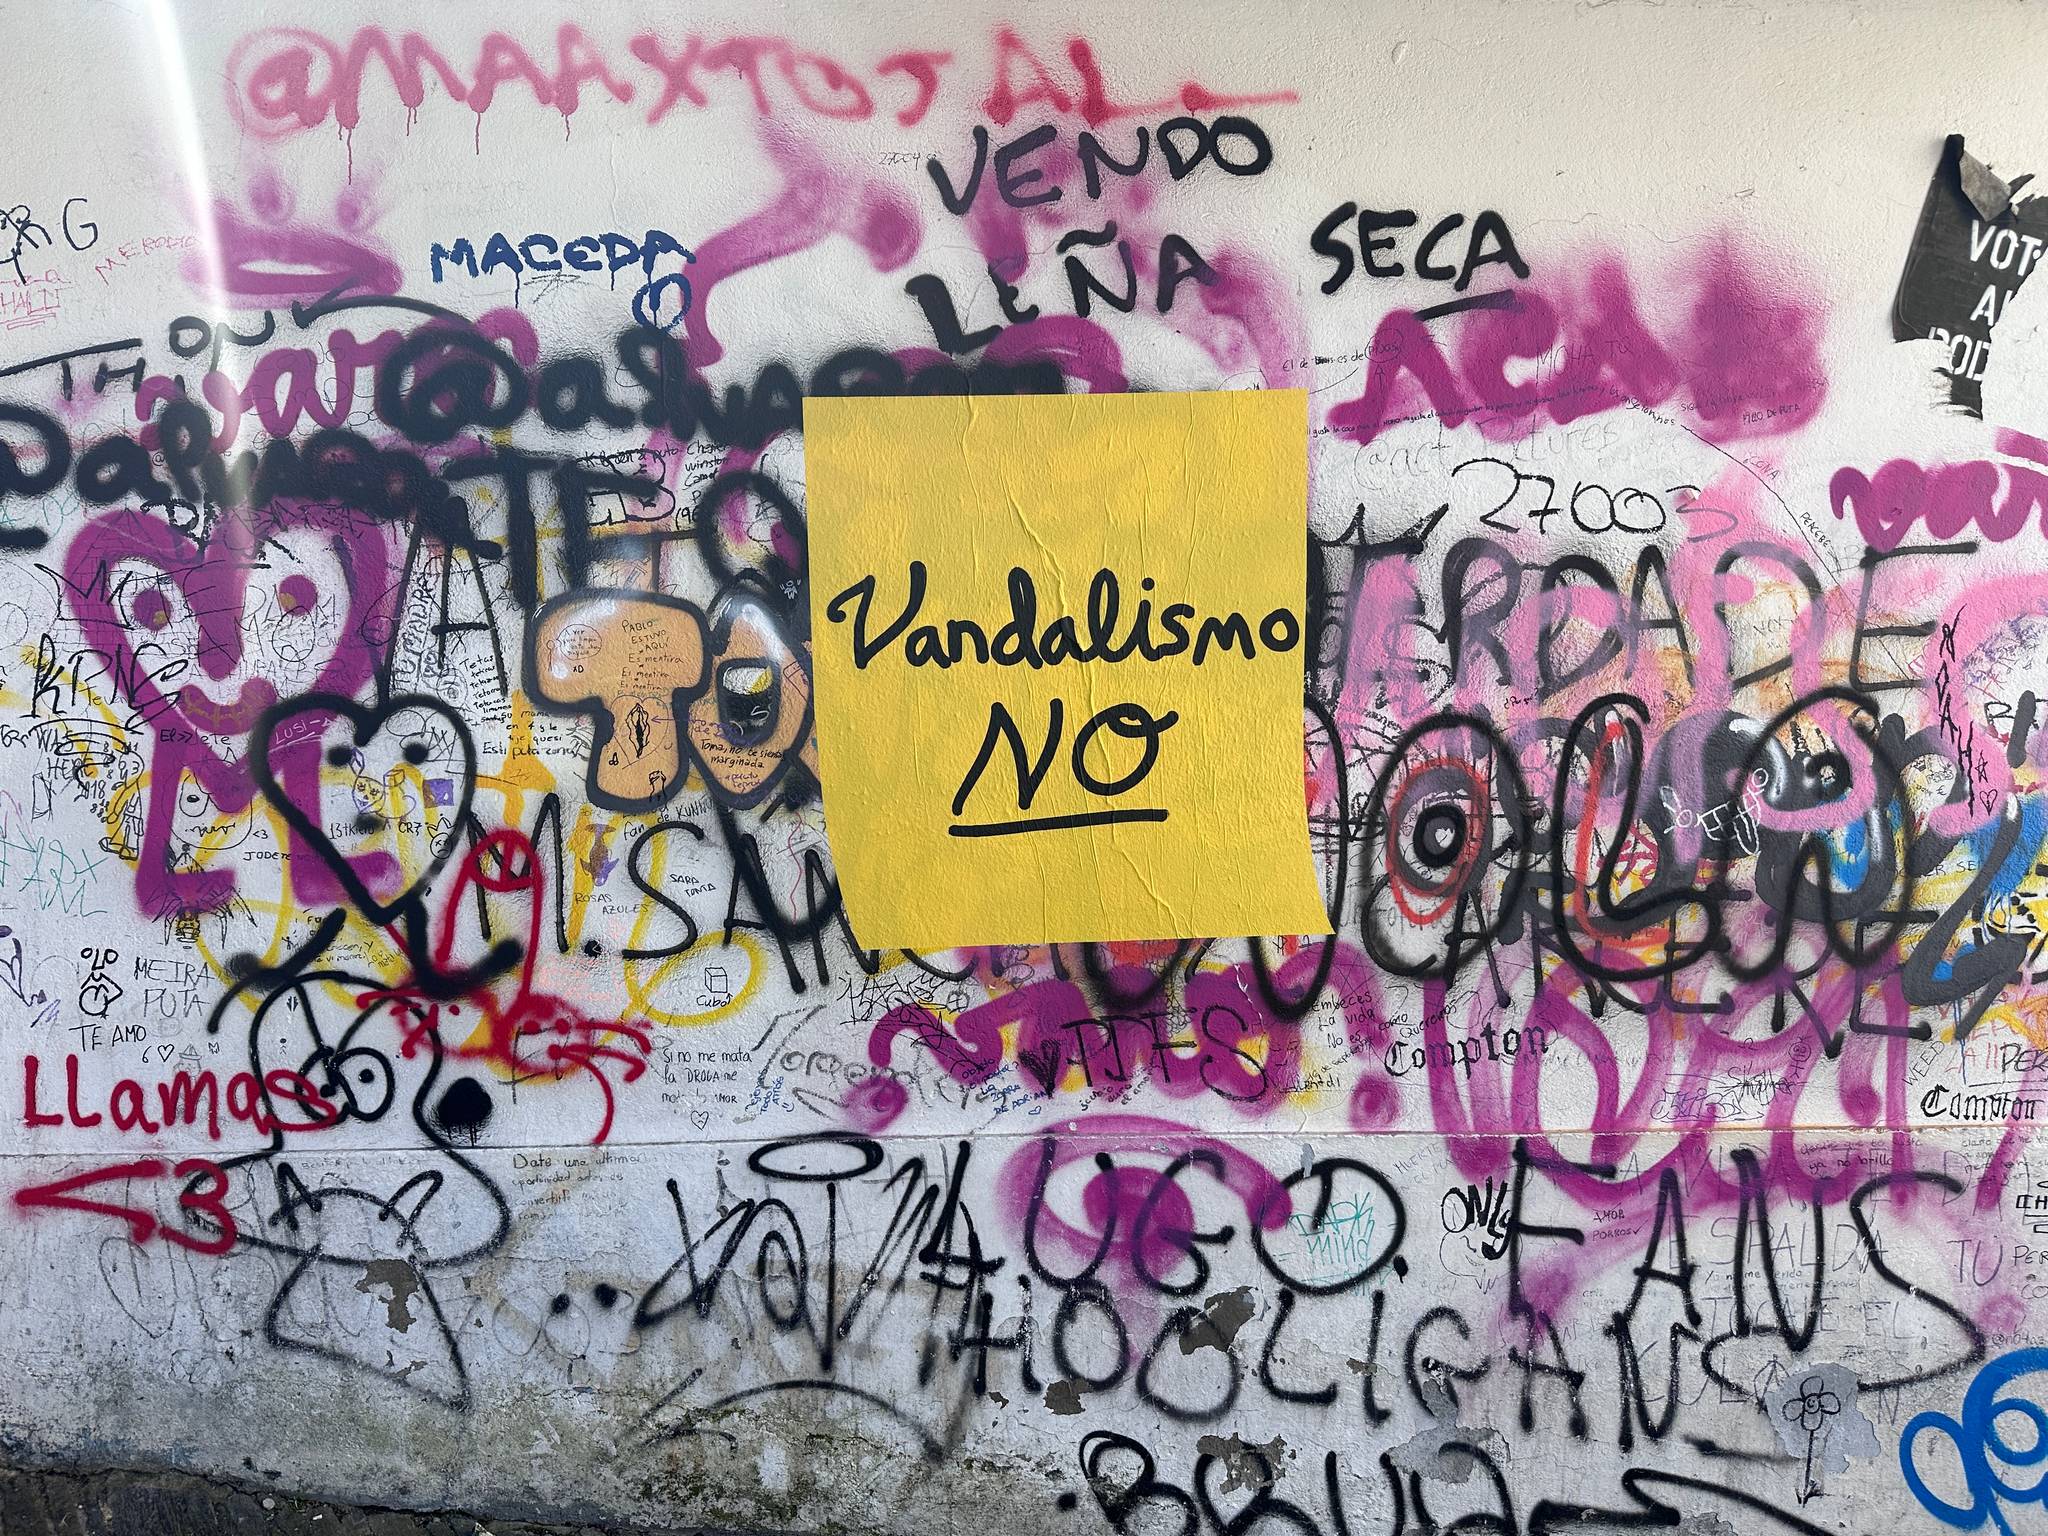 Leandro Barea&mdash;Vandalismo NO